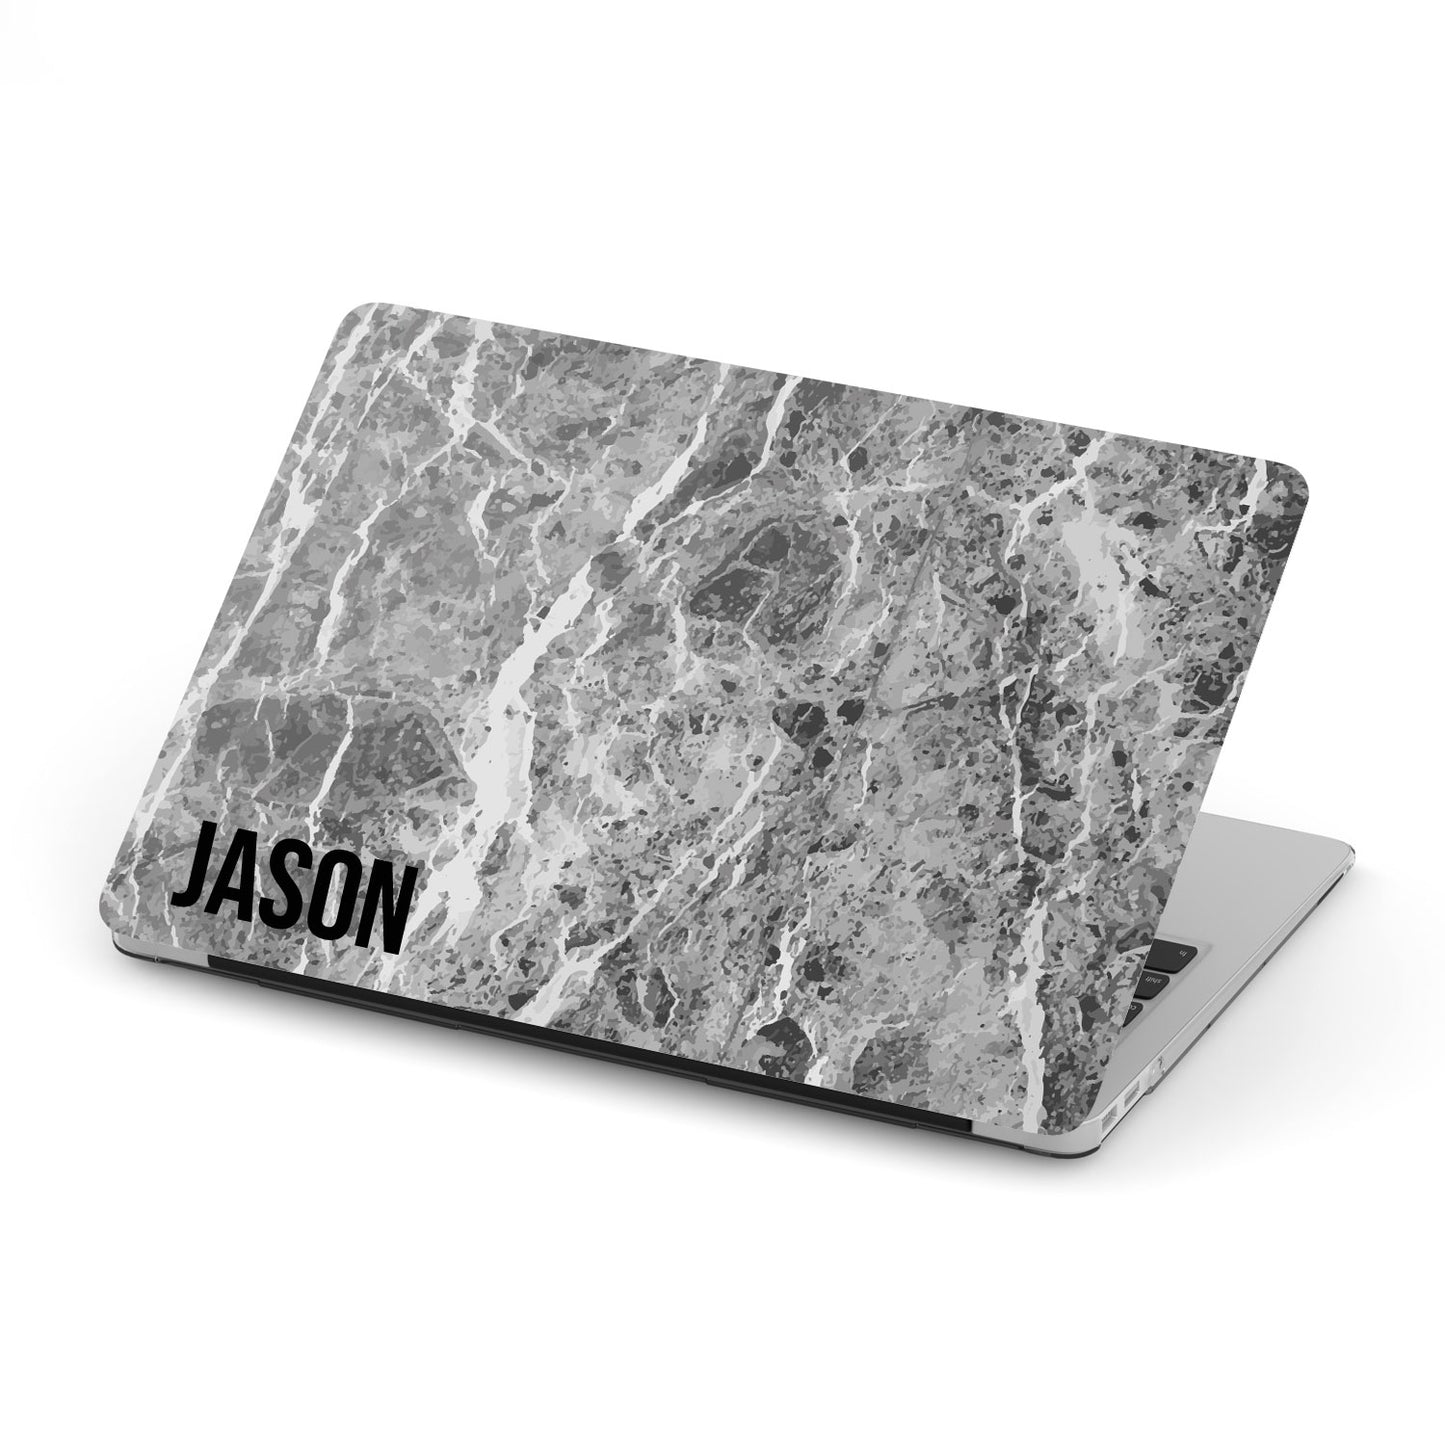 Personalized Macbook Hard Shell Case - Dark Grey Marble